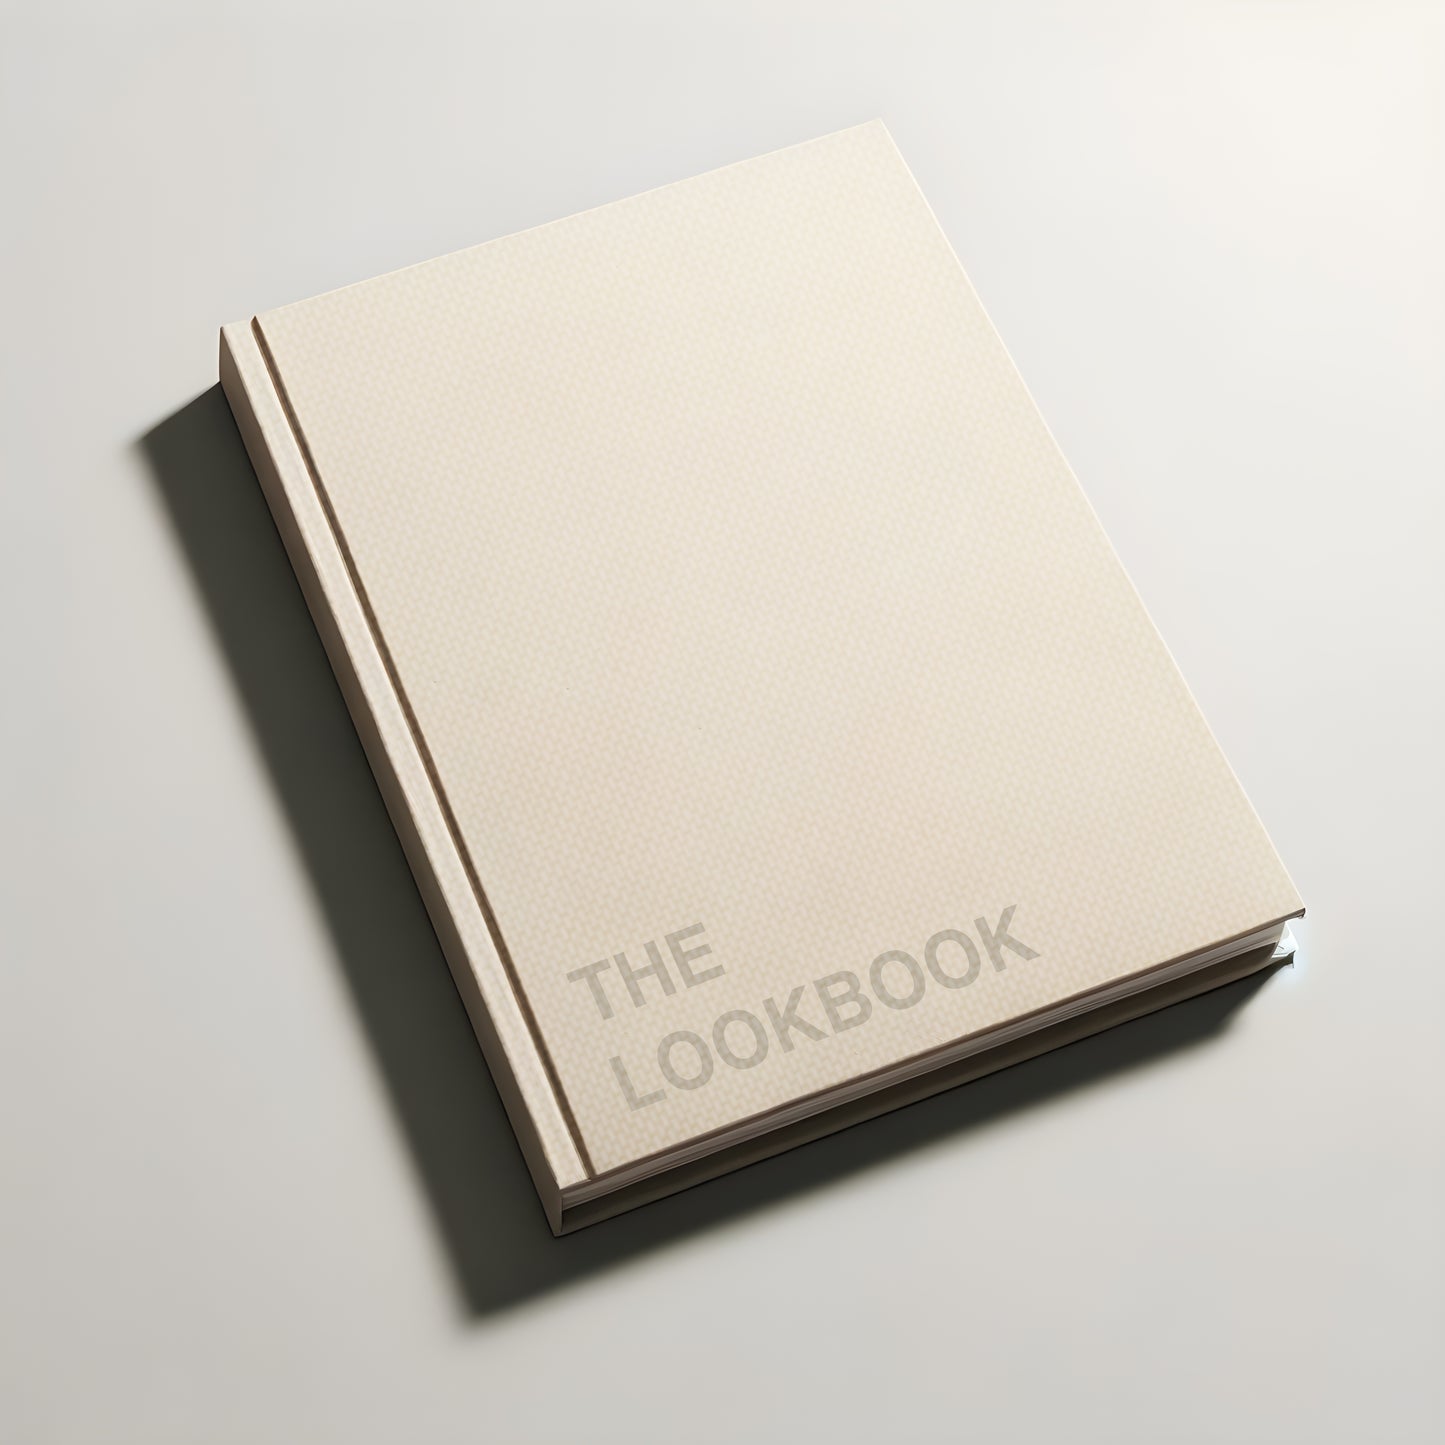 The Lookbook